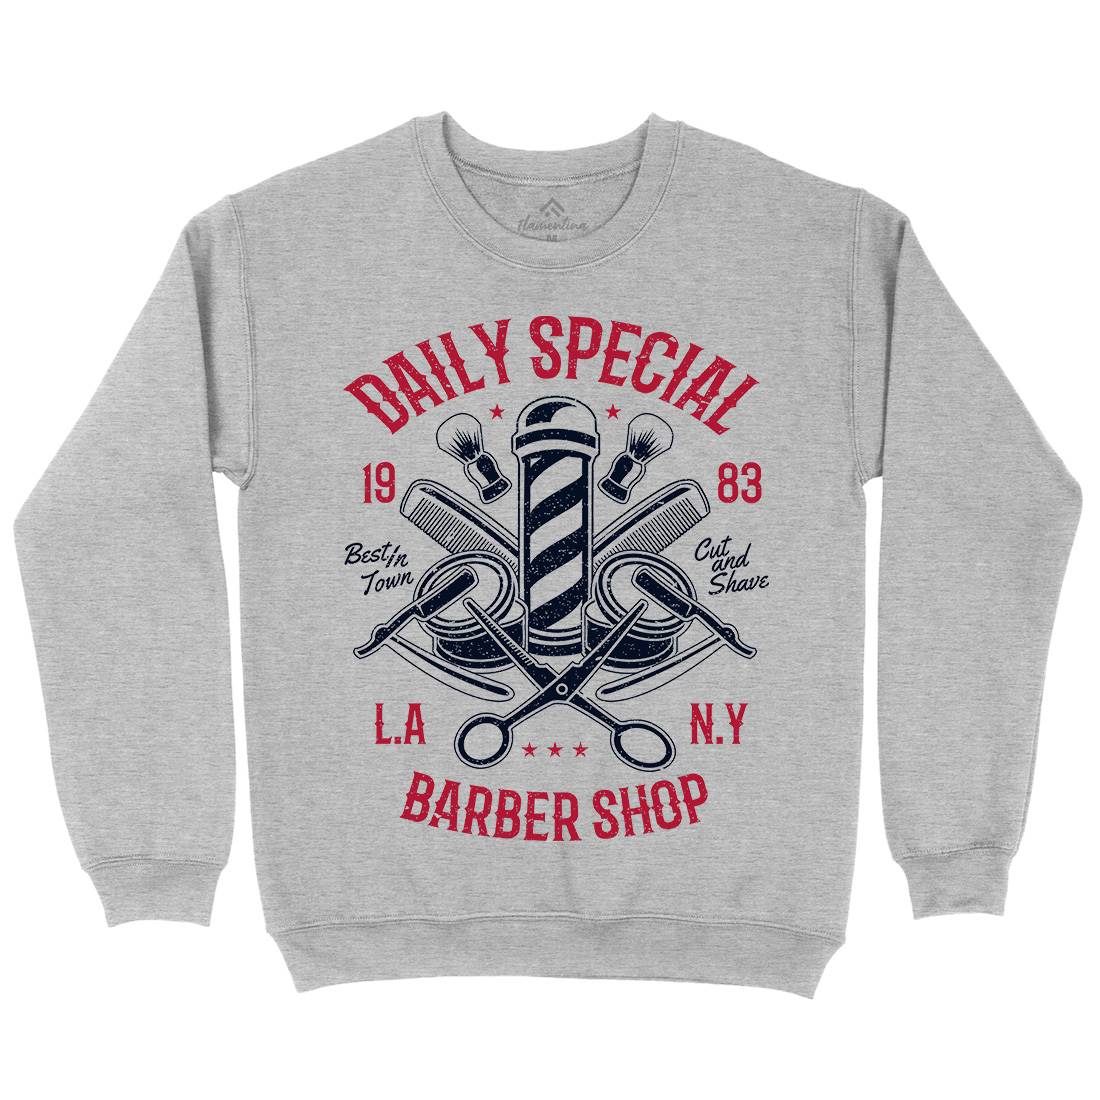 Daily Special Shop Mens Crew Neck Sweatshirt Barber A041